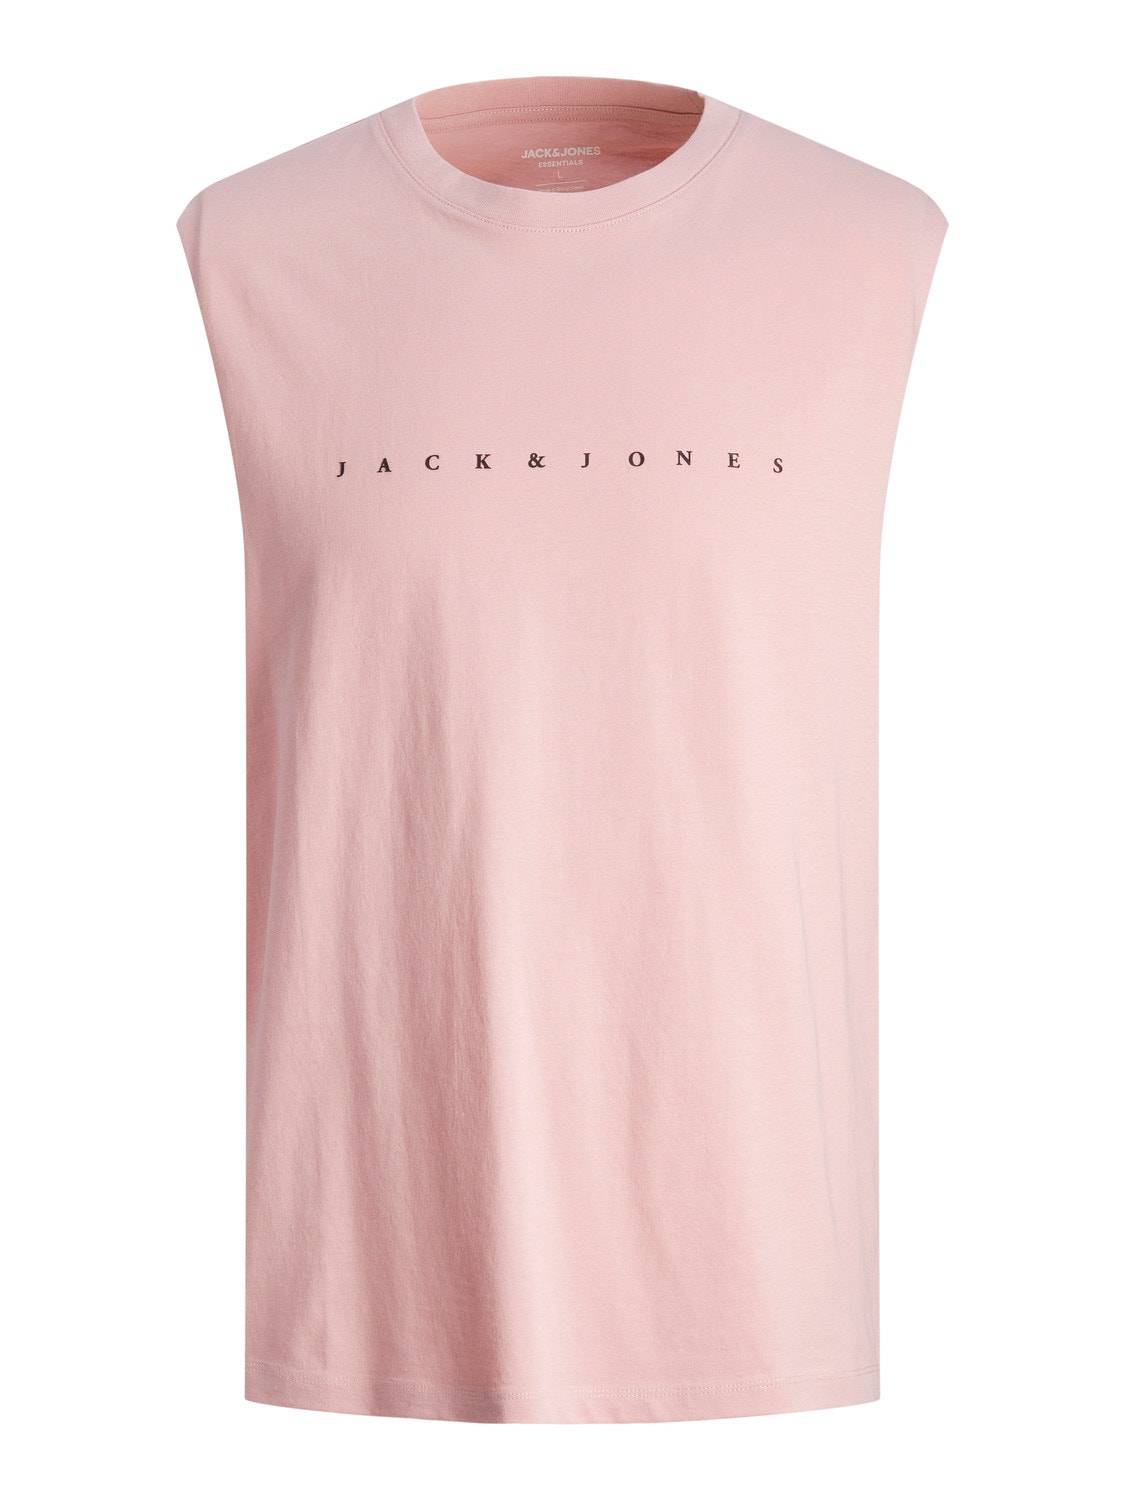 Jack & Jones Printed Crew neck T-shirt -Pink Nectar - 12249131